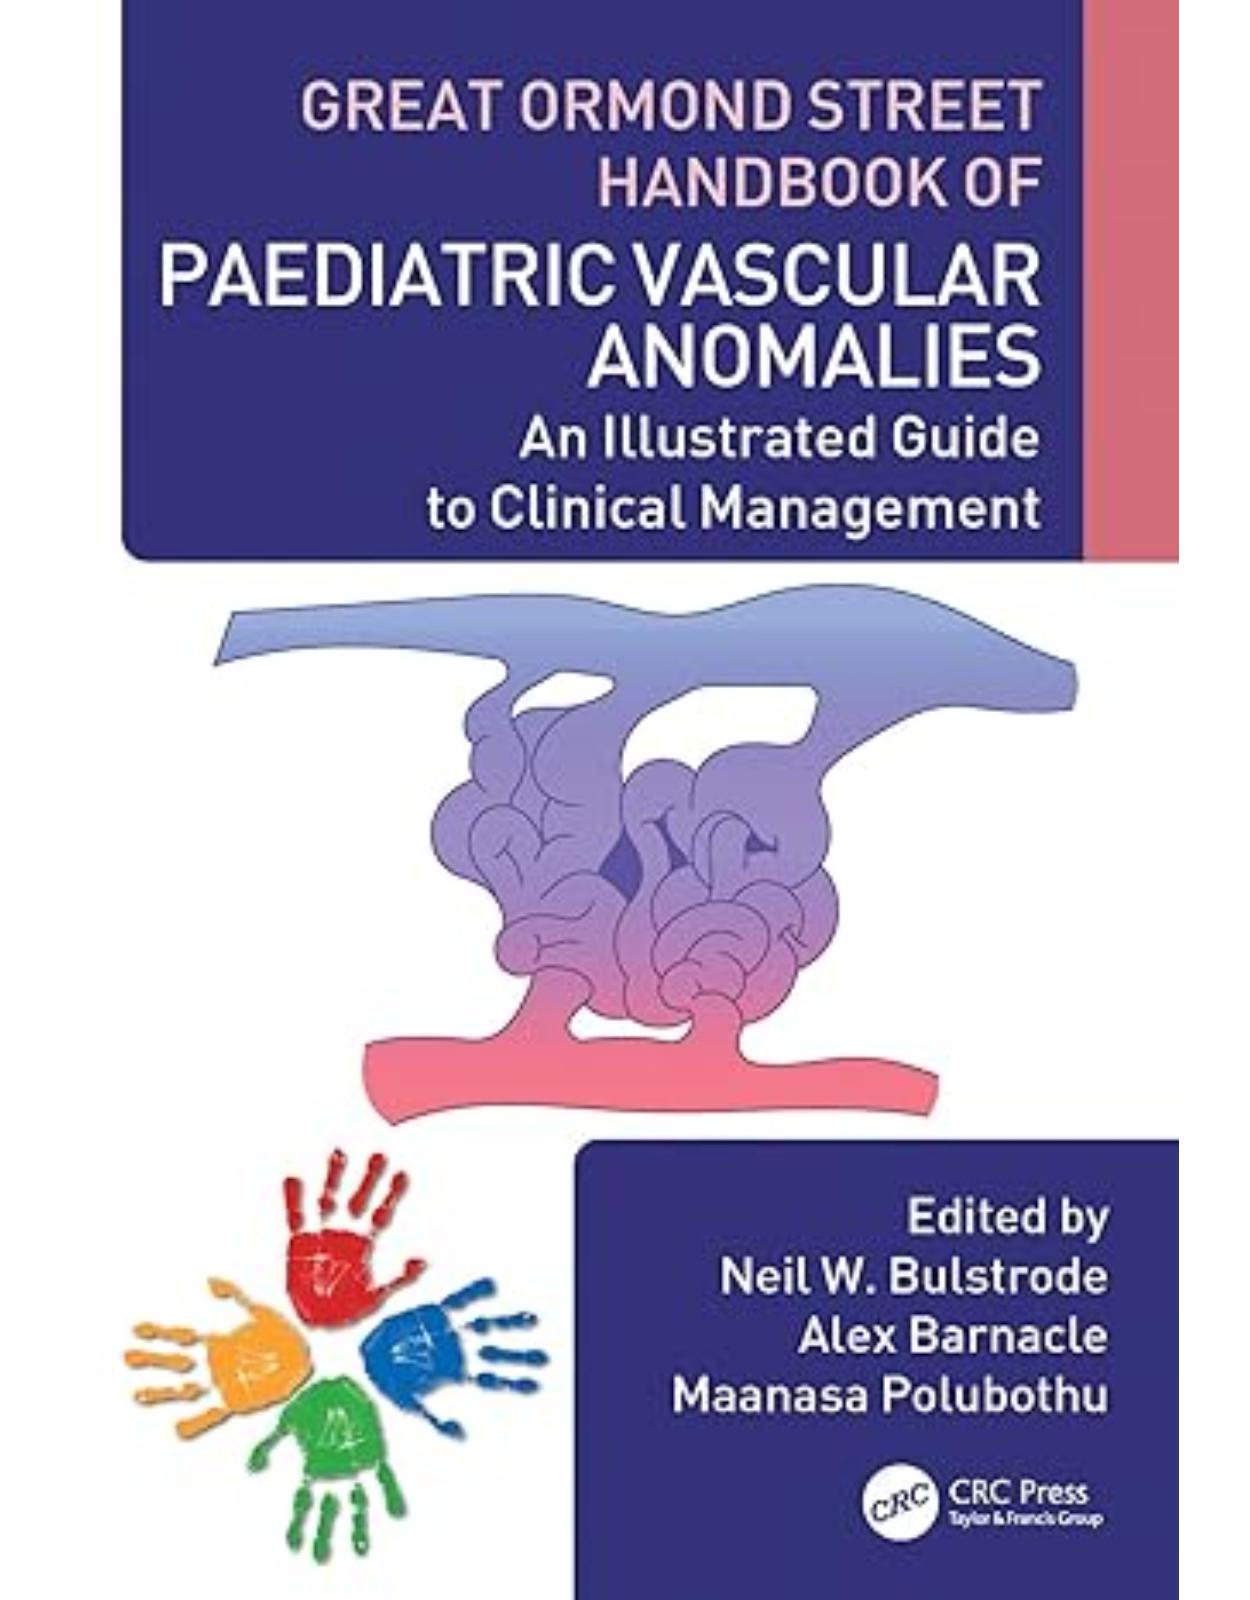 Great Ormond Street Handbook of Paediatric Vascular Anomalies